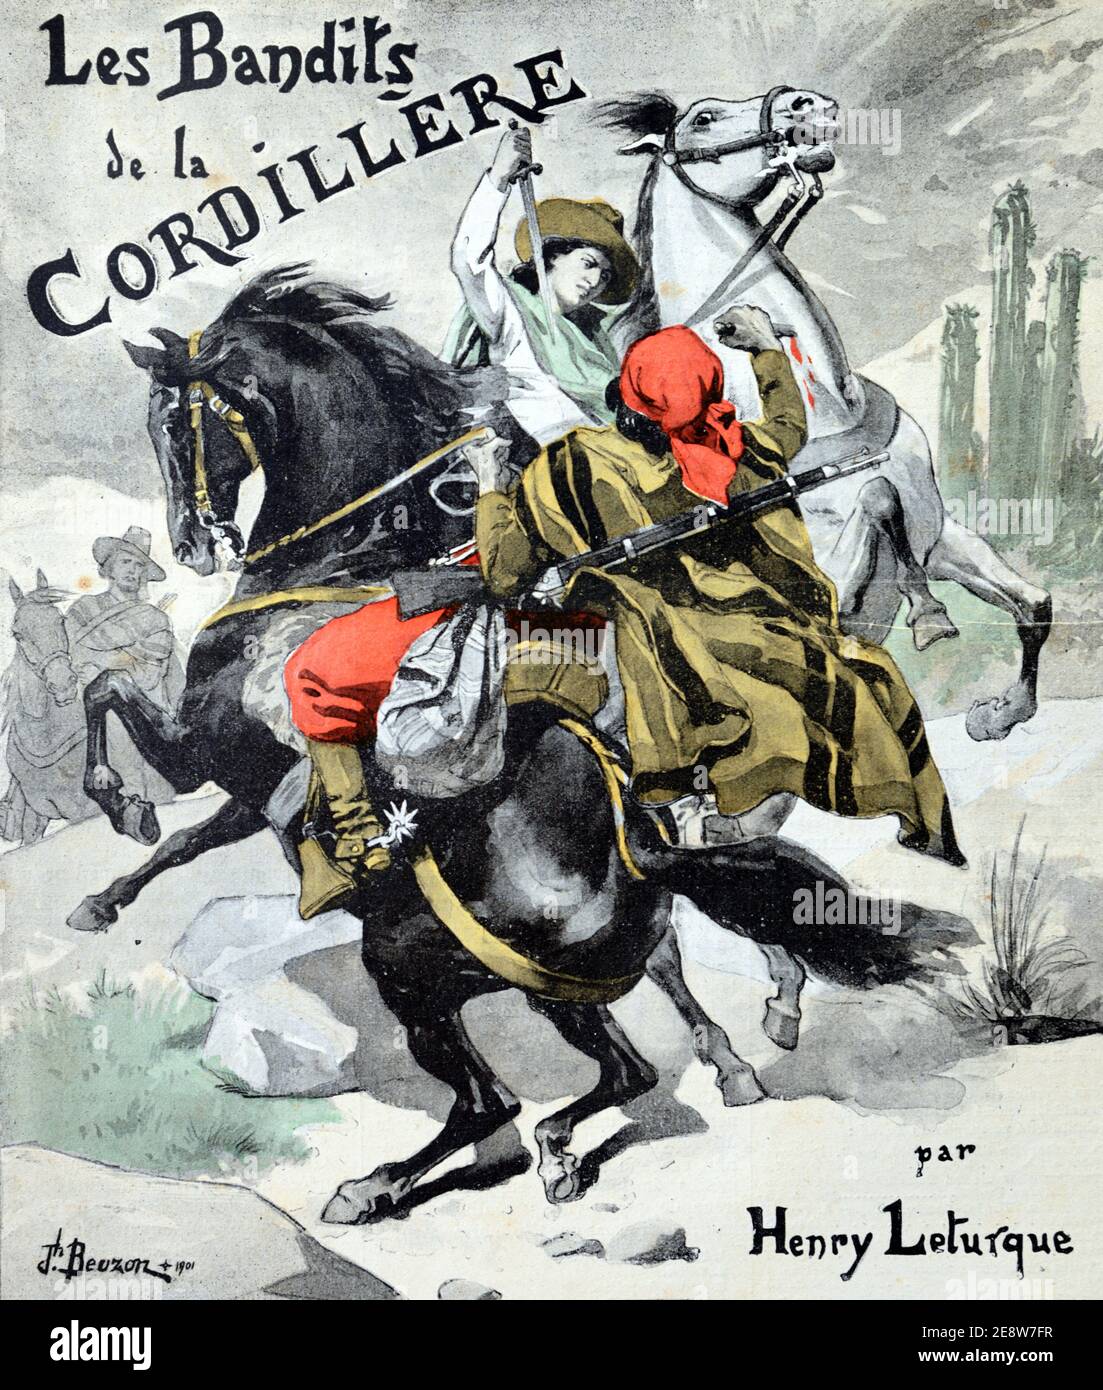 Old Book Cover 'Les Bandits de la Cordillière' by Henry Leturque, Bandits of the Cordillera Andes South America 1901 Vintage Illustration or Engraving Stock Photo